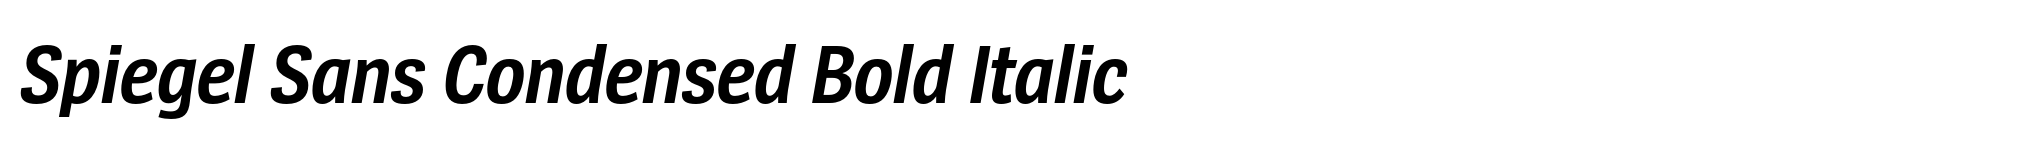 Spiegel Sans Condensed Bold Italic image